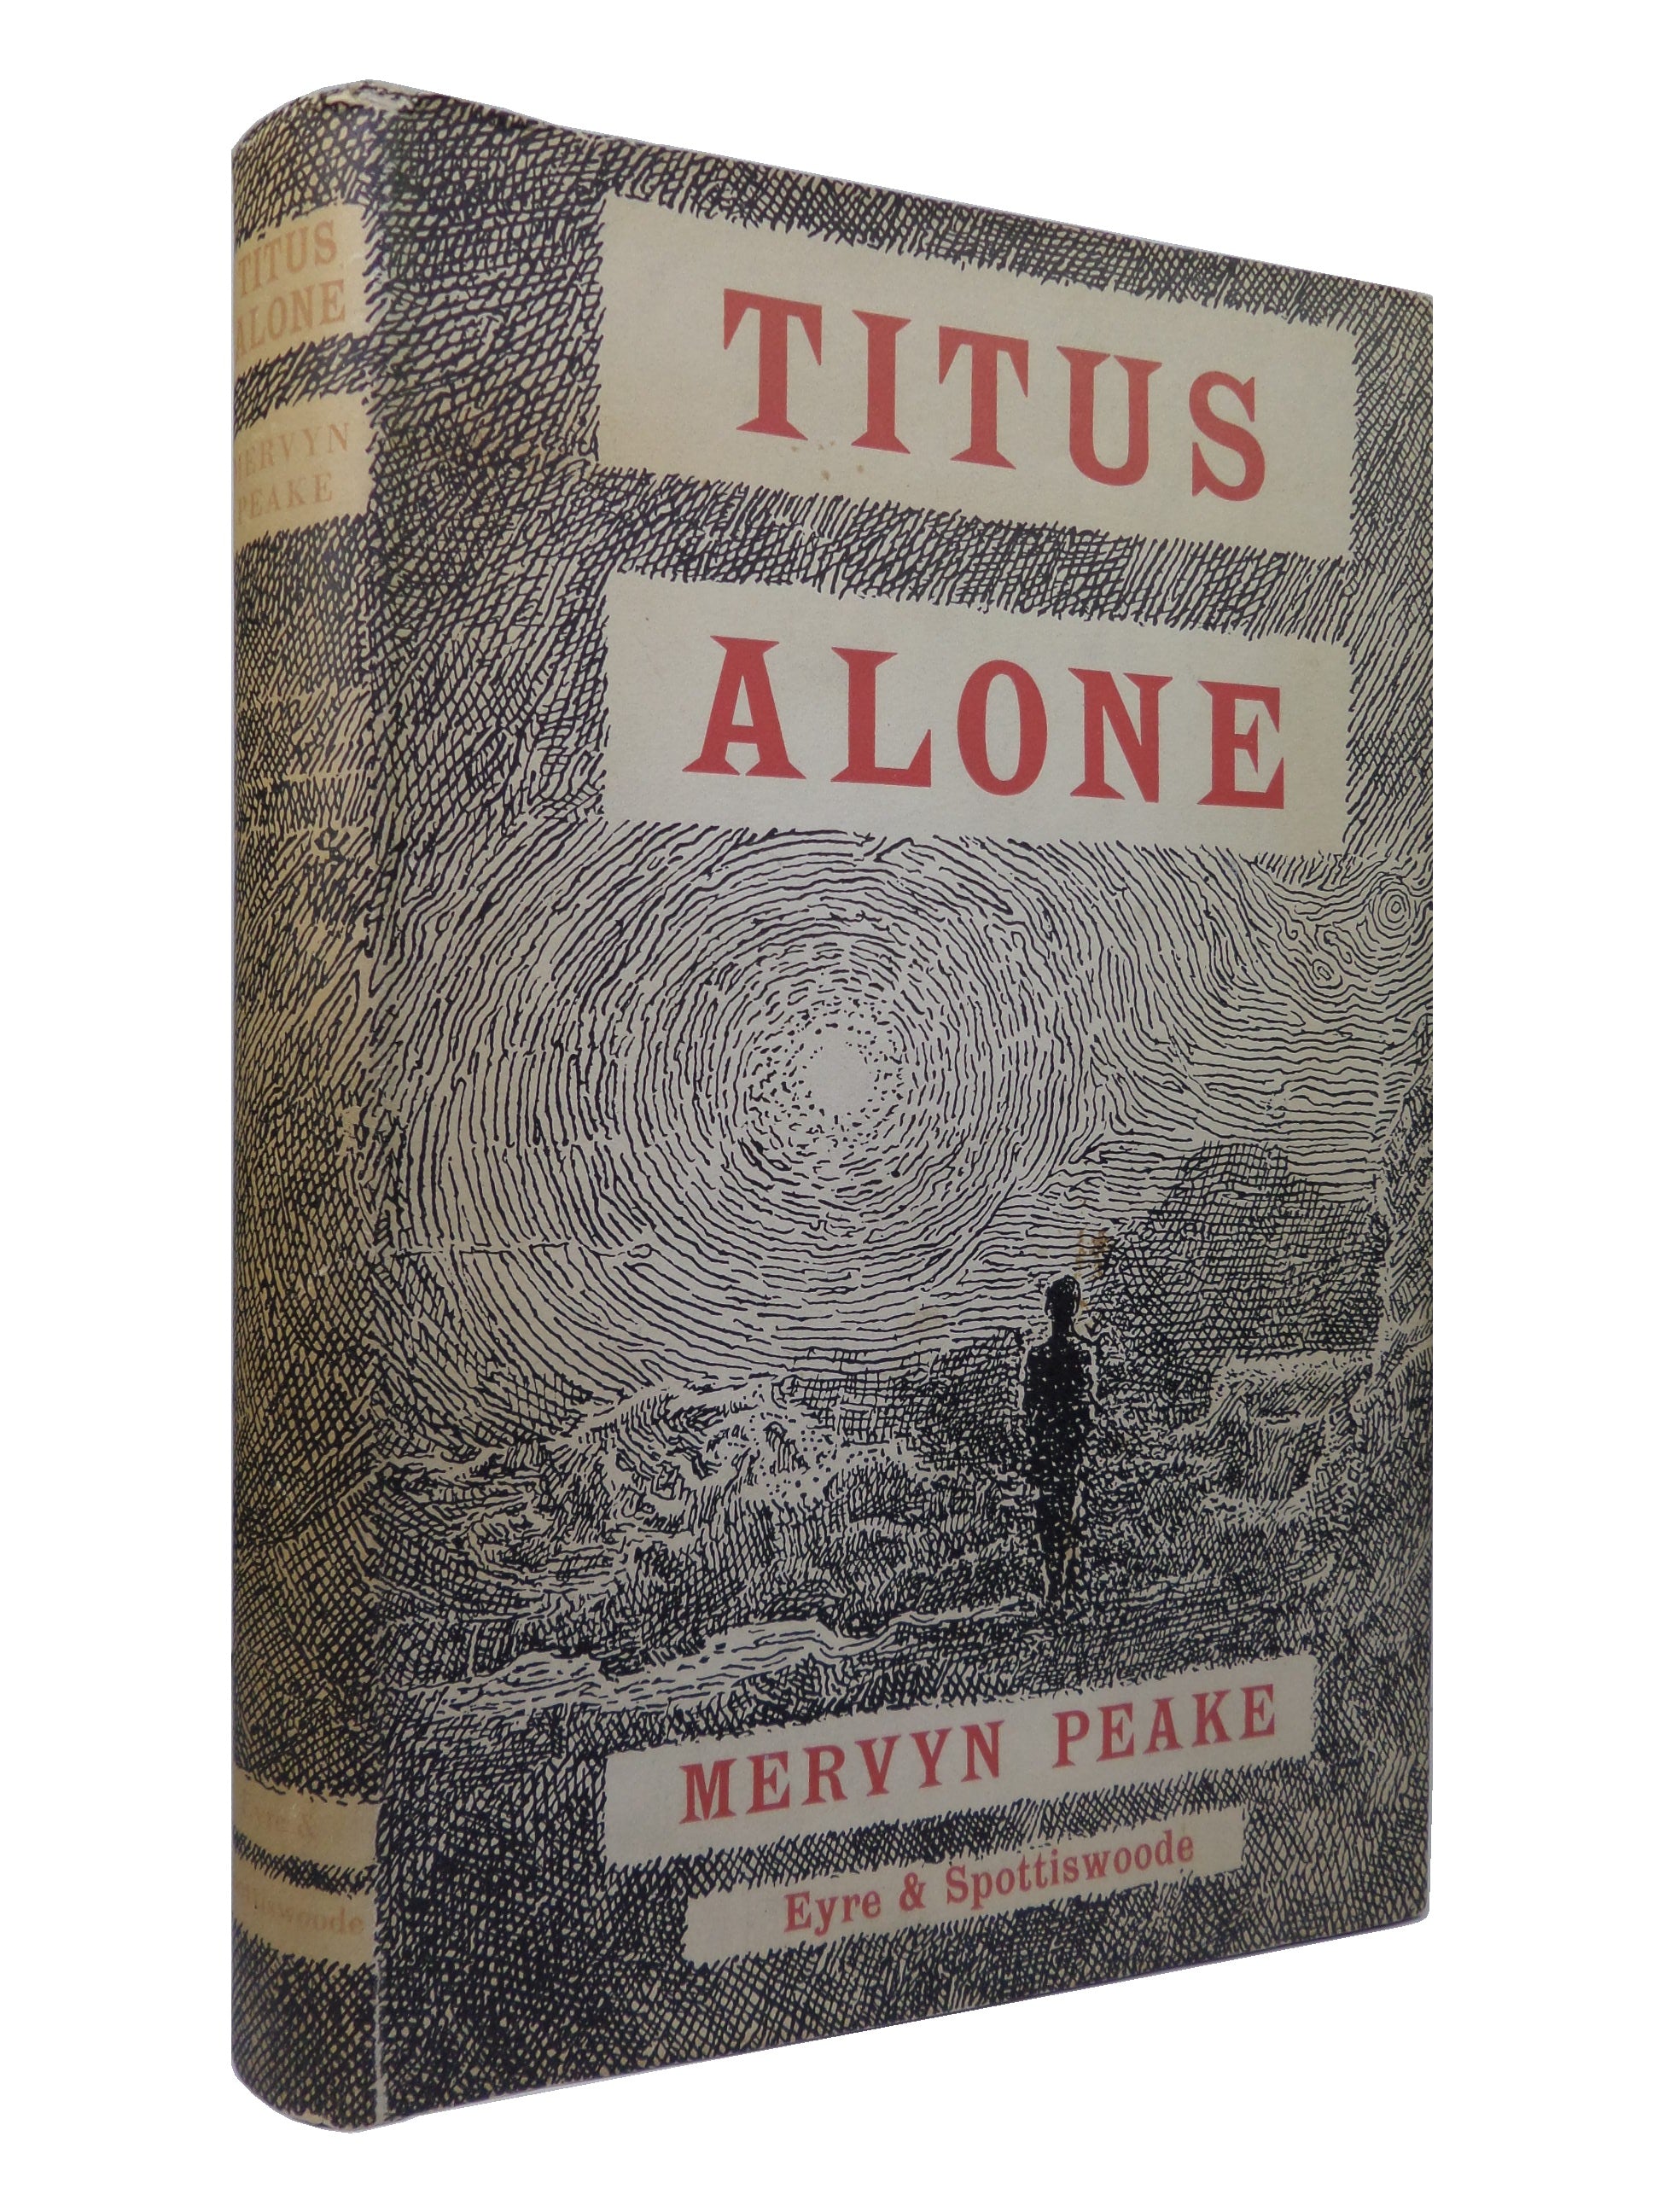 TITUS ALONE BY MERVYN PEAKE 1959 FIRST EDITION